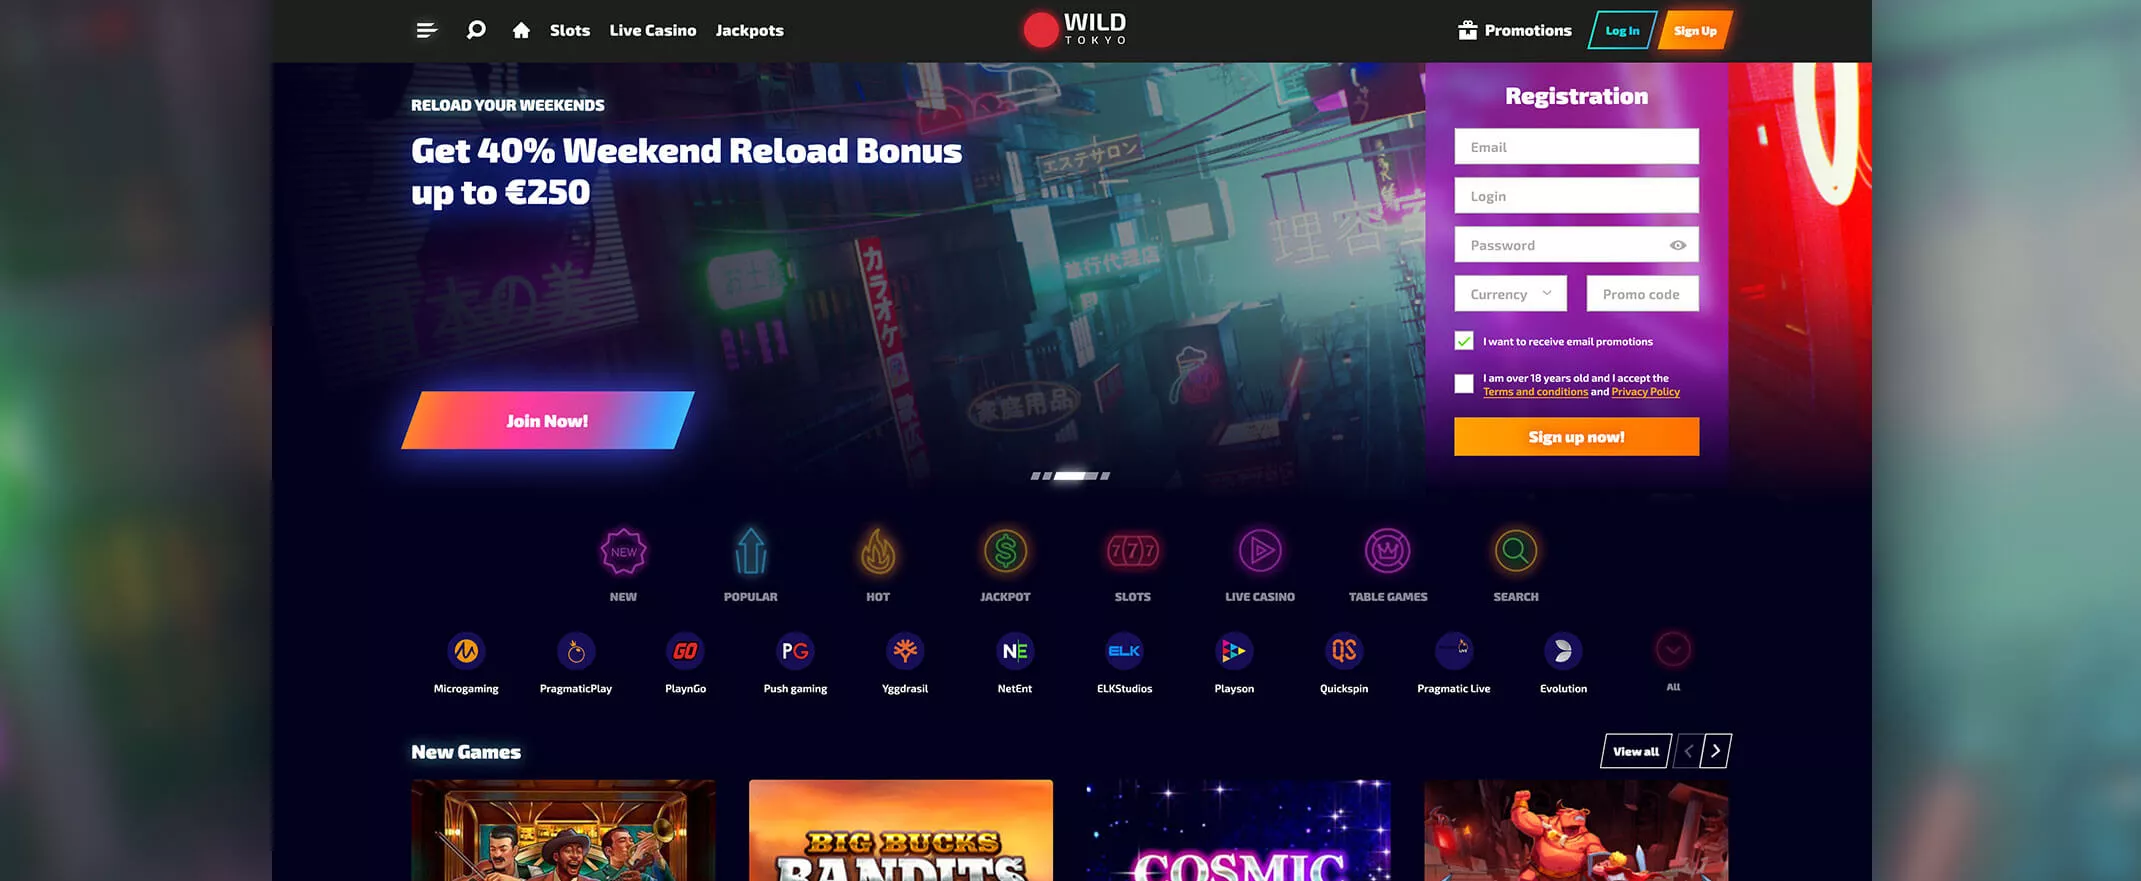 Wild Tokyo Casino homepage screenshot